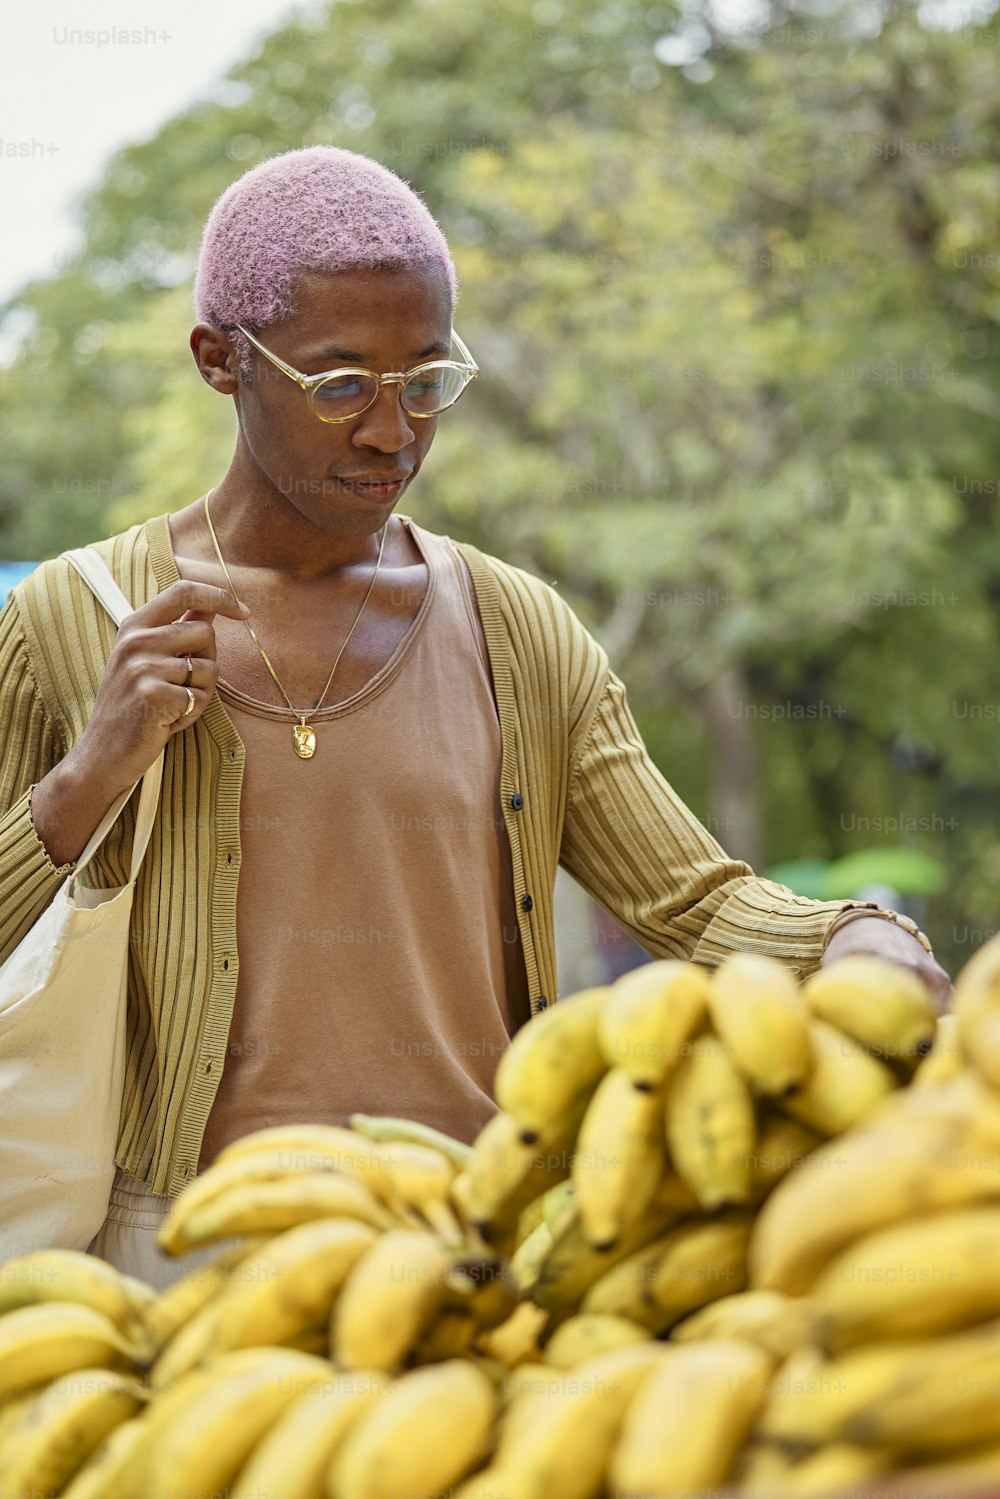 Un homme debout devant un tas de bananes